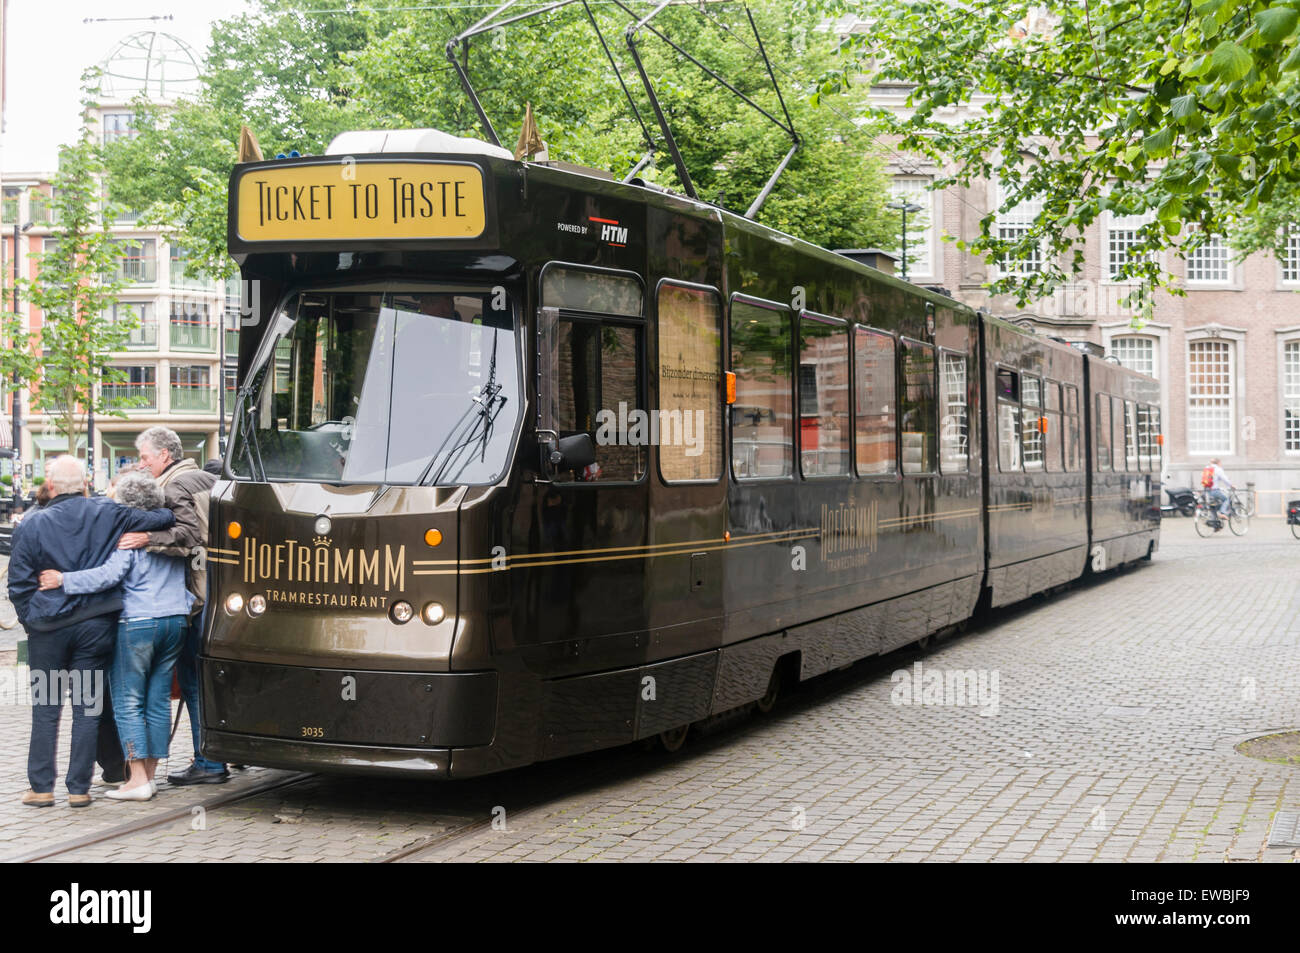 La gente in attesa a bordo del tram Hoftrammm ristorante, Den Haag, Paesi Bassi. Foto Stock